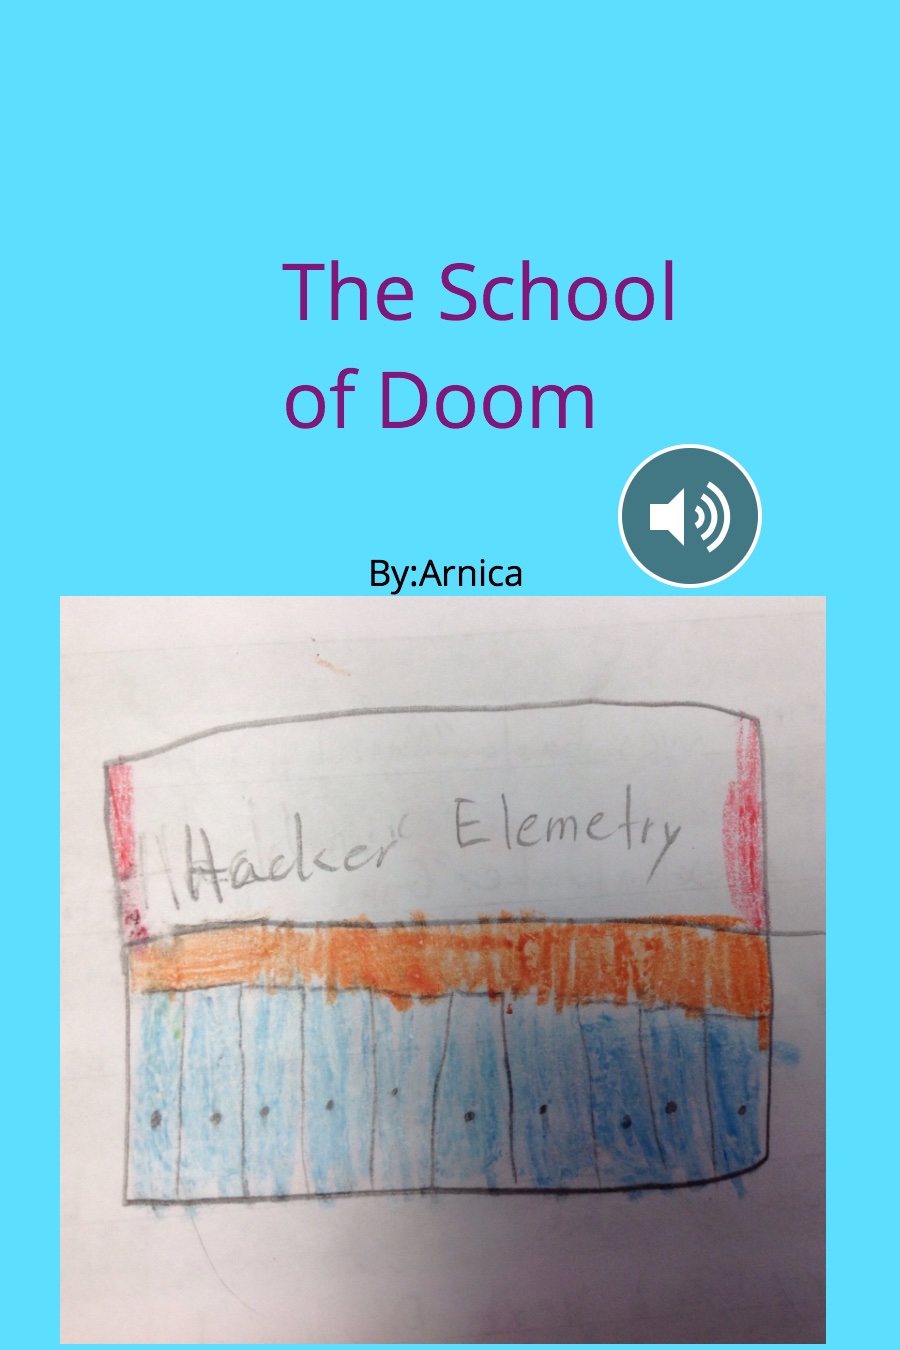 School of Doom by Arnica A